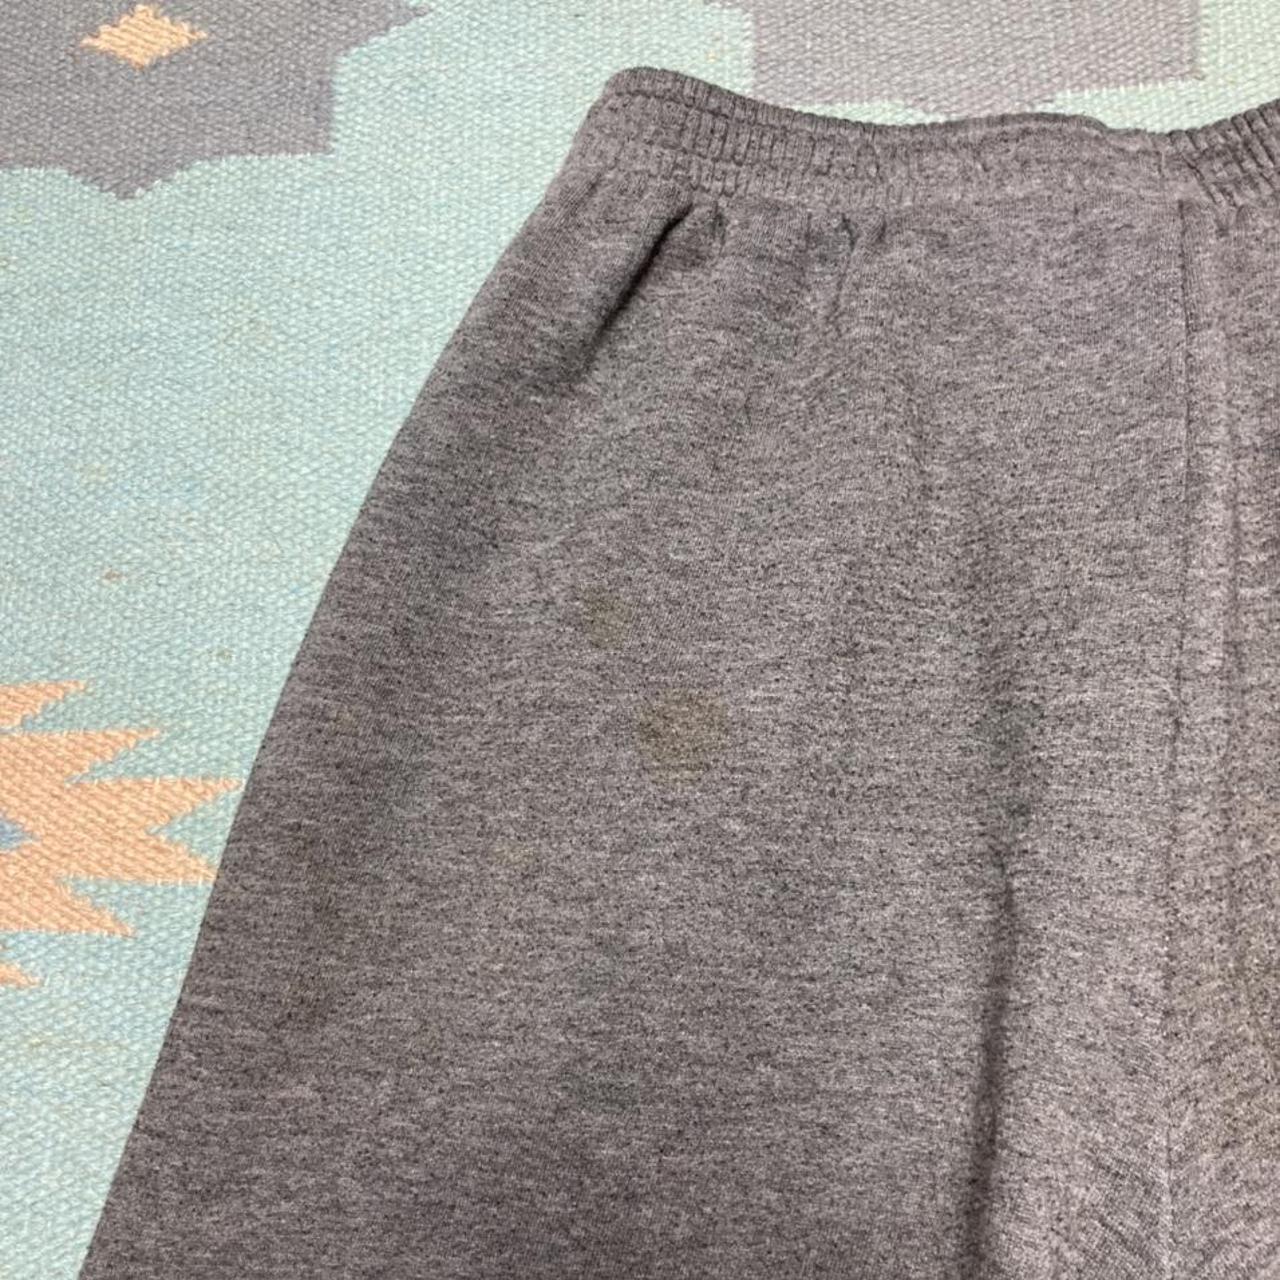 Vintage Nike sweatpants white tag 90s y2k faded gray - Depop